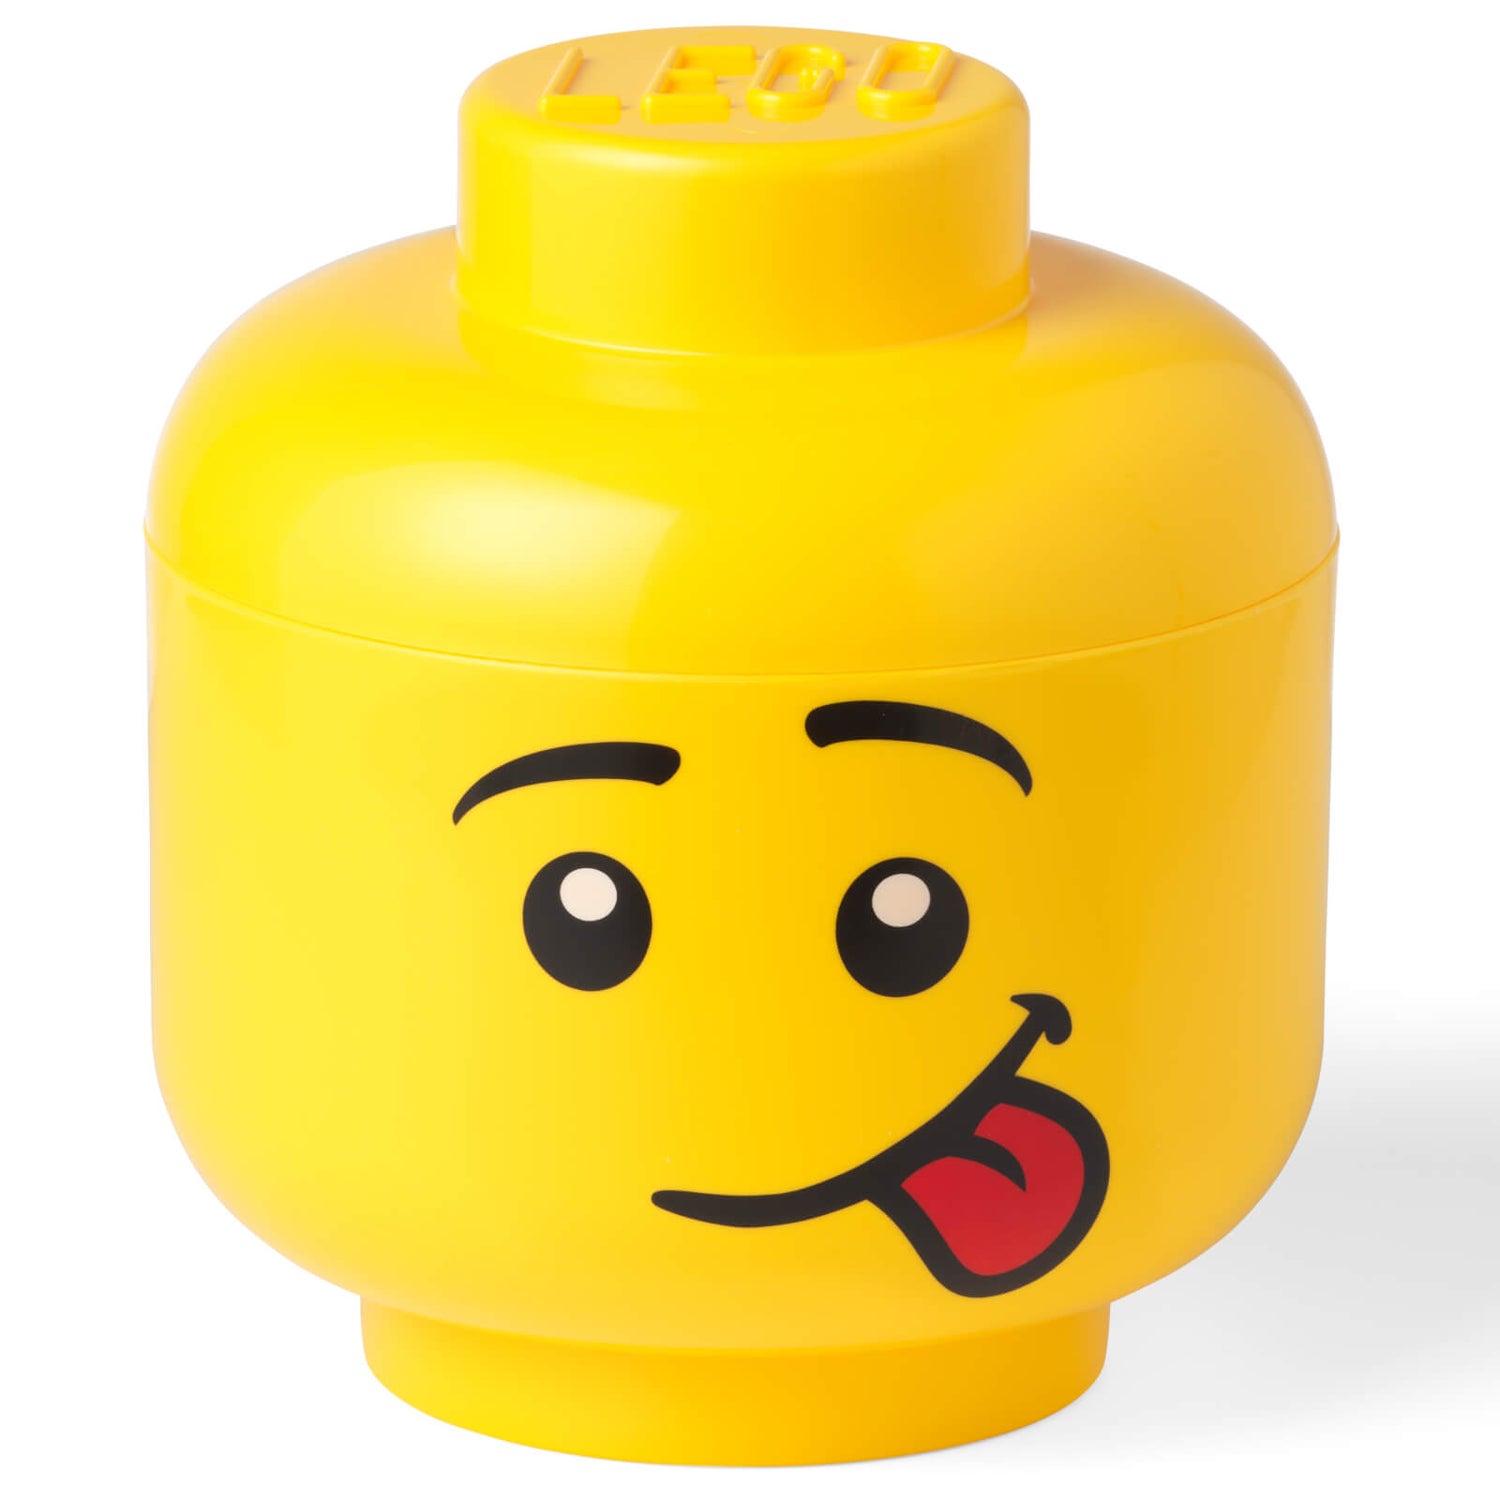 LEGO Storage Head Silly Large